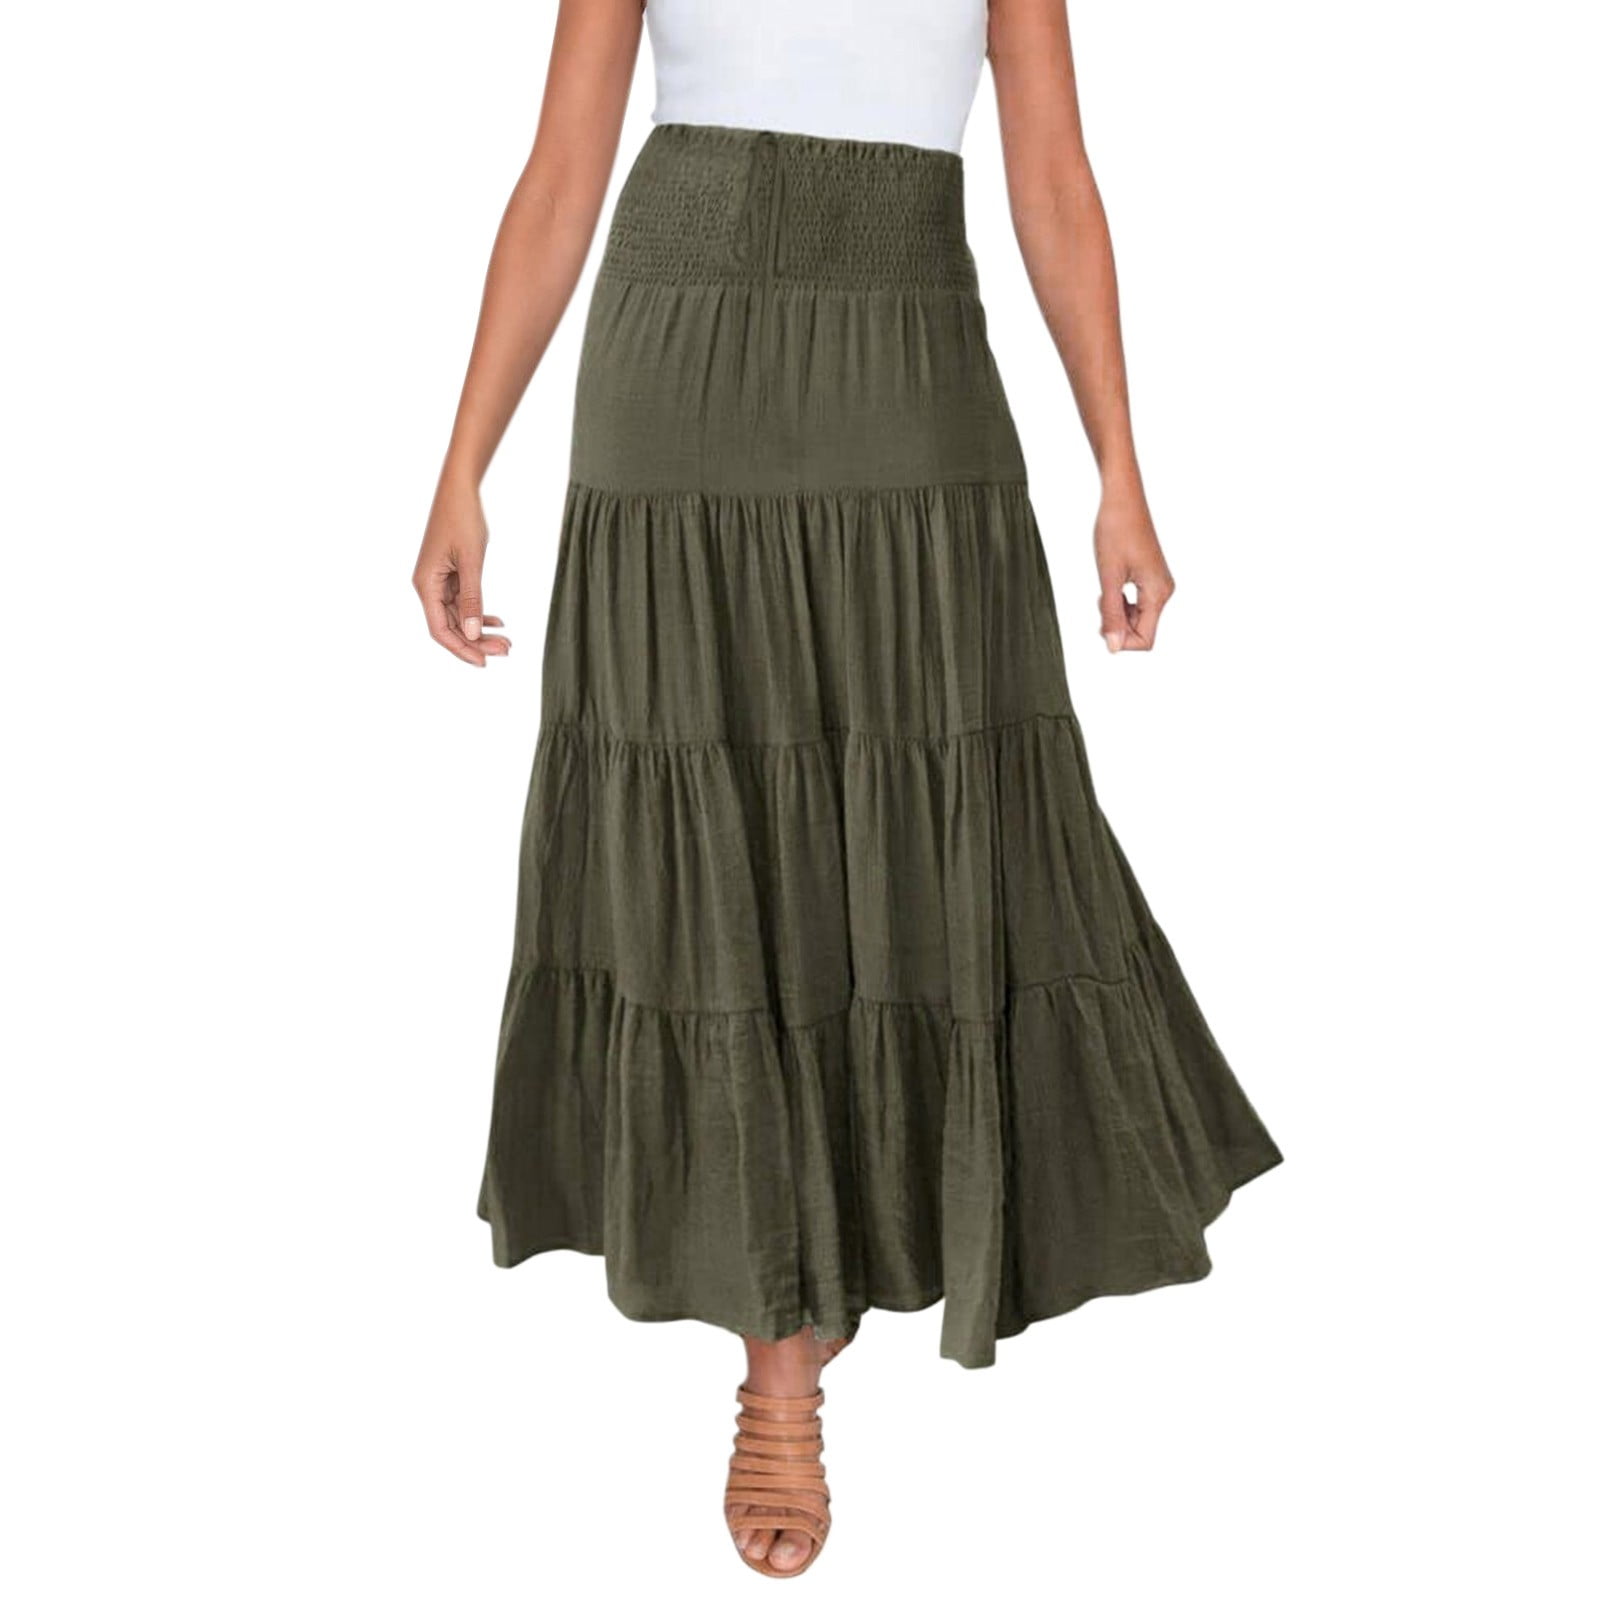 CAICJ98 Mini Skirt Women Boho Floral Slit Midi Skirt Elastic High ...